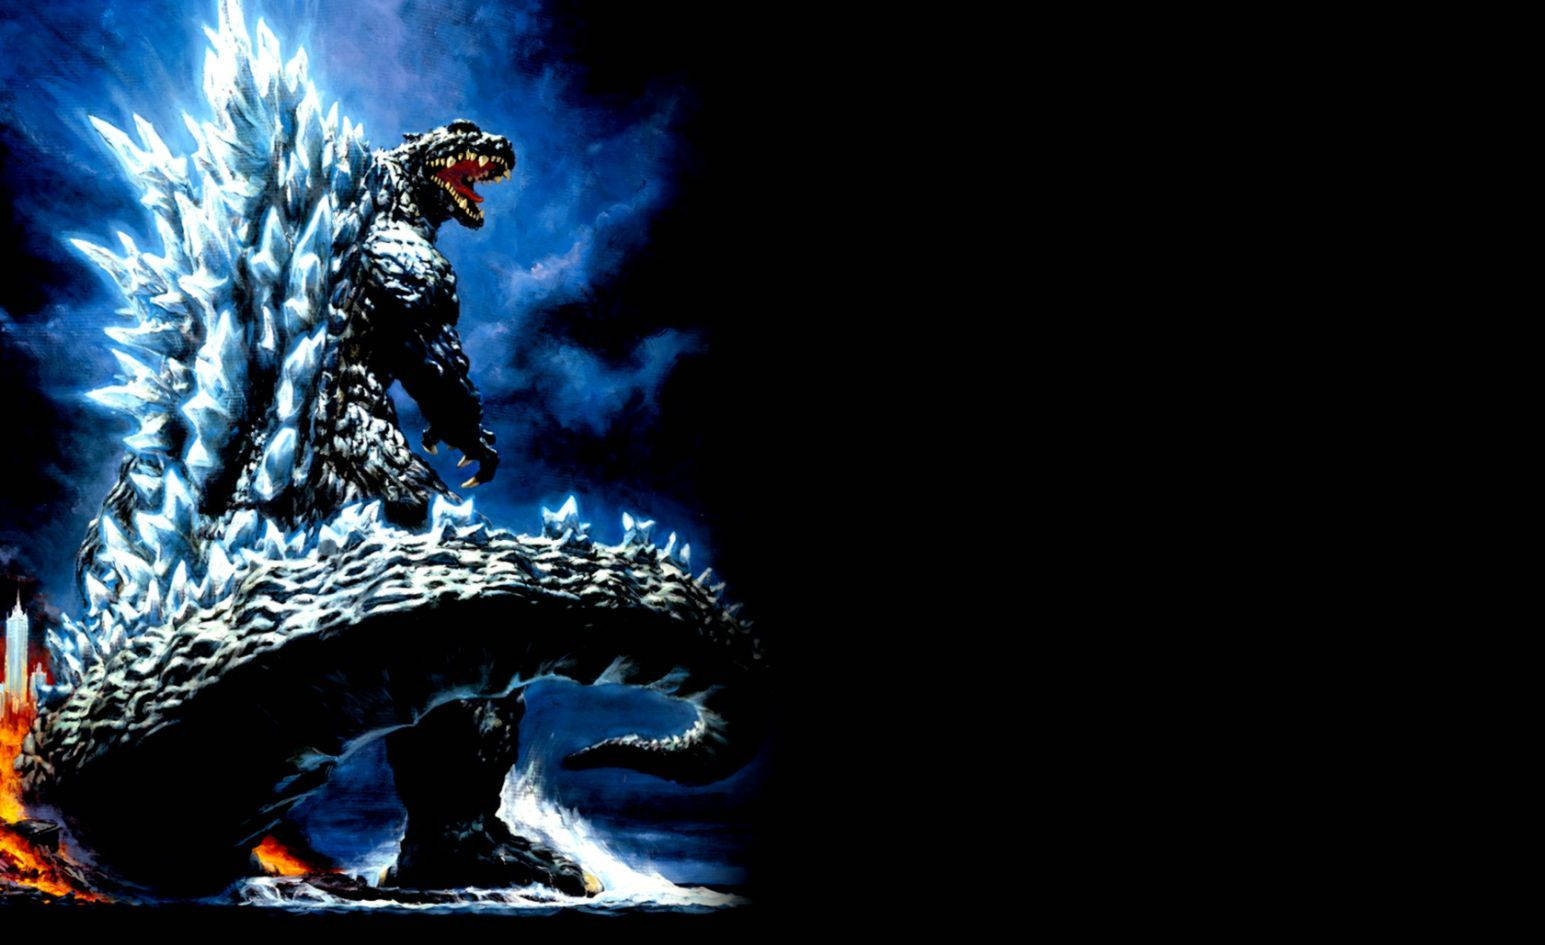 "Godzilla Awakens in a Frosty Ice Blue" Wallpaper